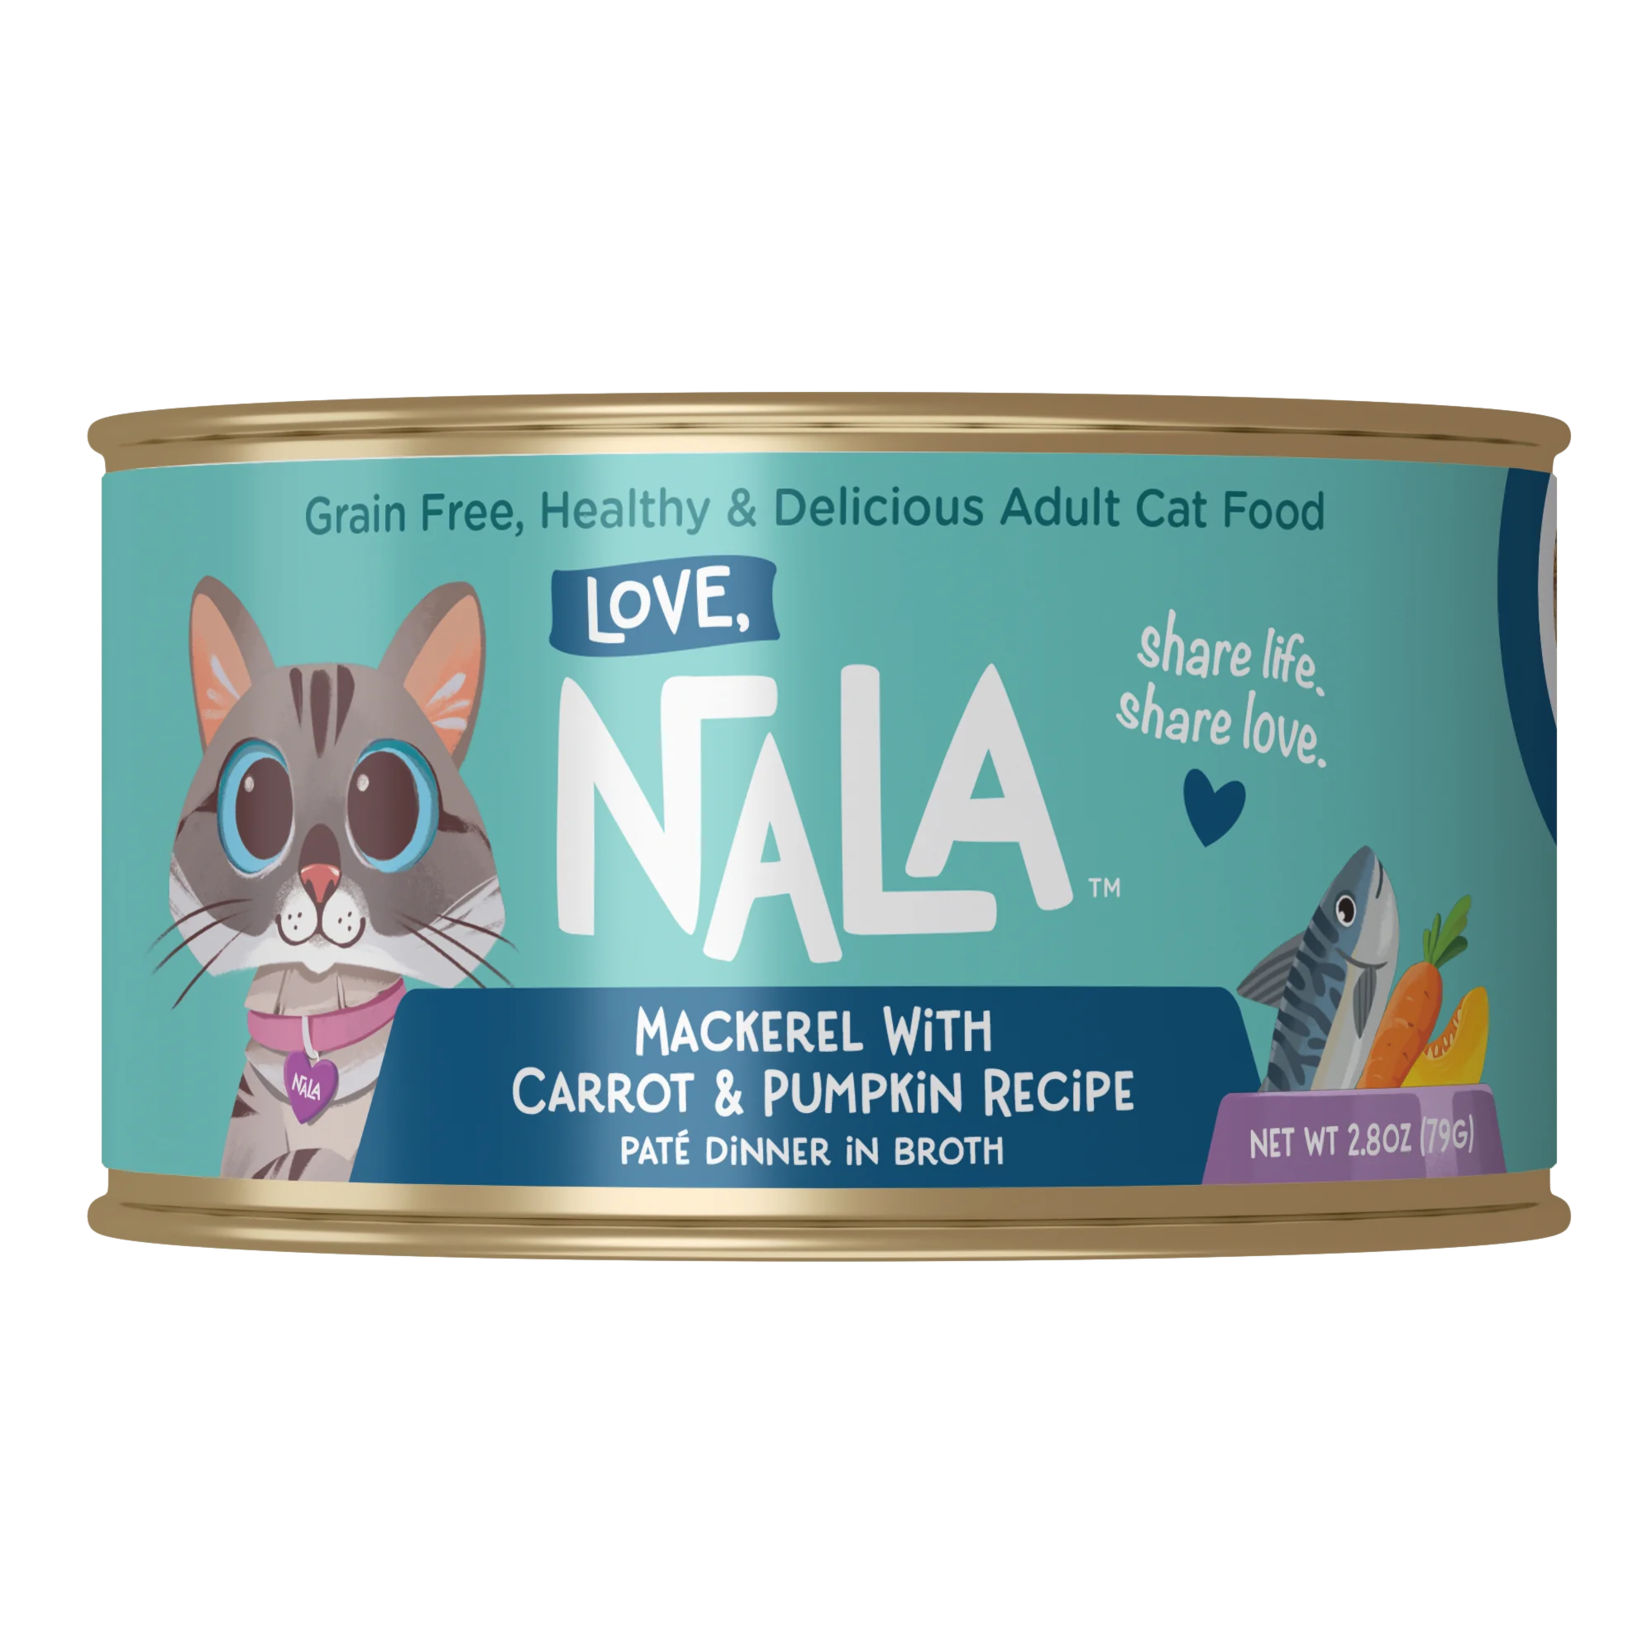 Love, Nala Love, Nala Mackerel with Carrot & Pumpkin Recipe Paté Dinner in Broth Adult Cat Food